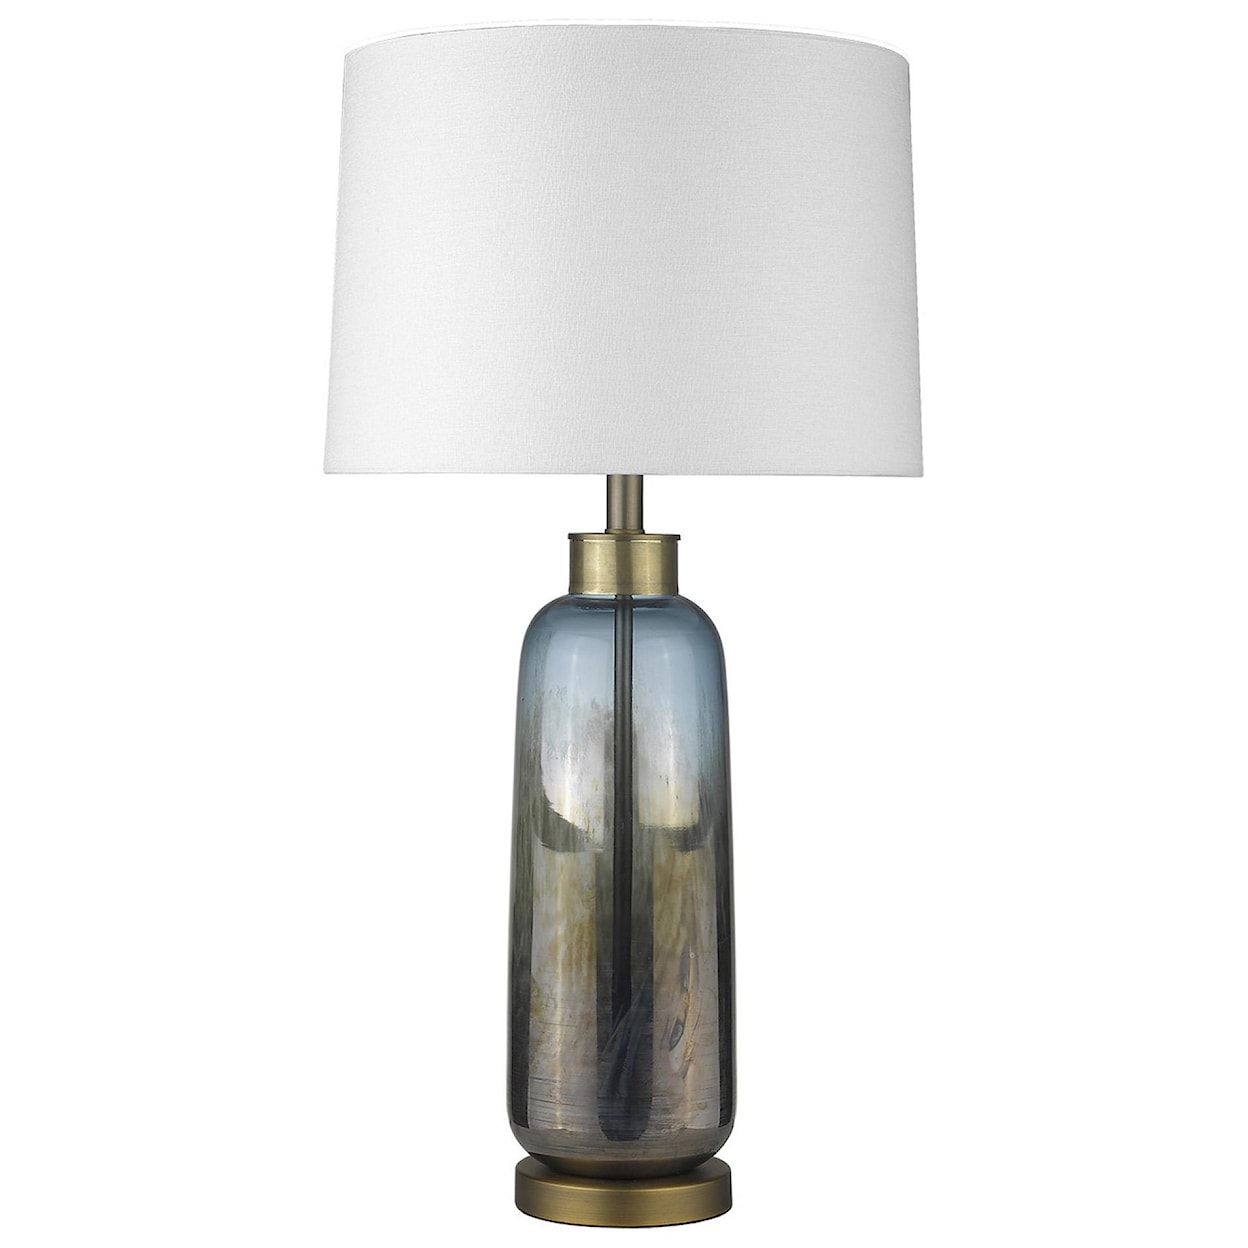 Acclaim Lighting Trend Home Table Lamp